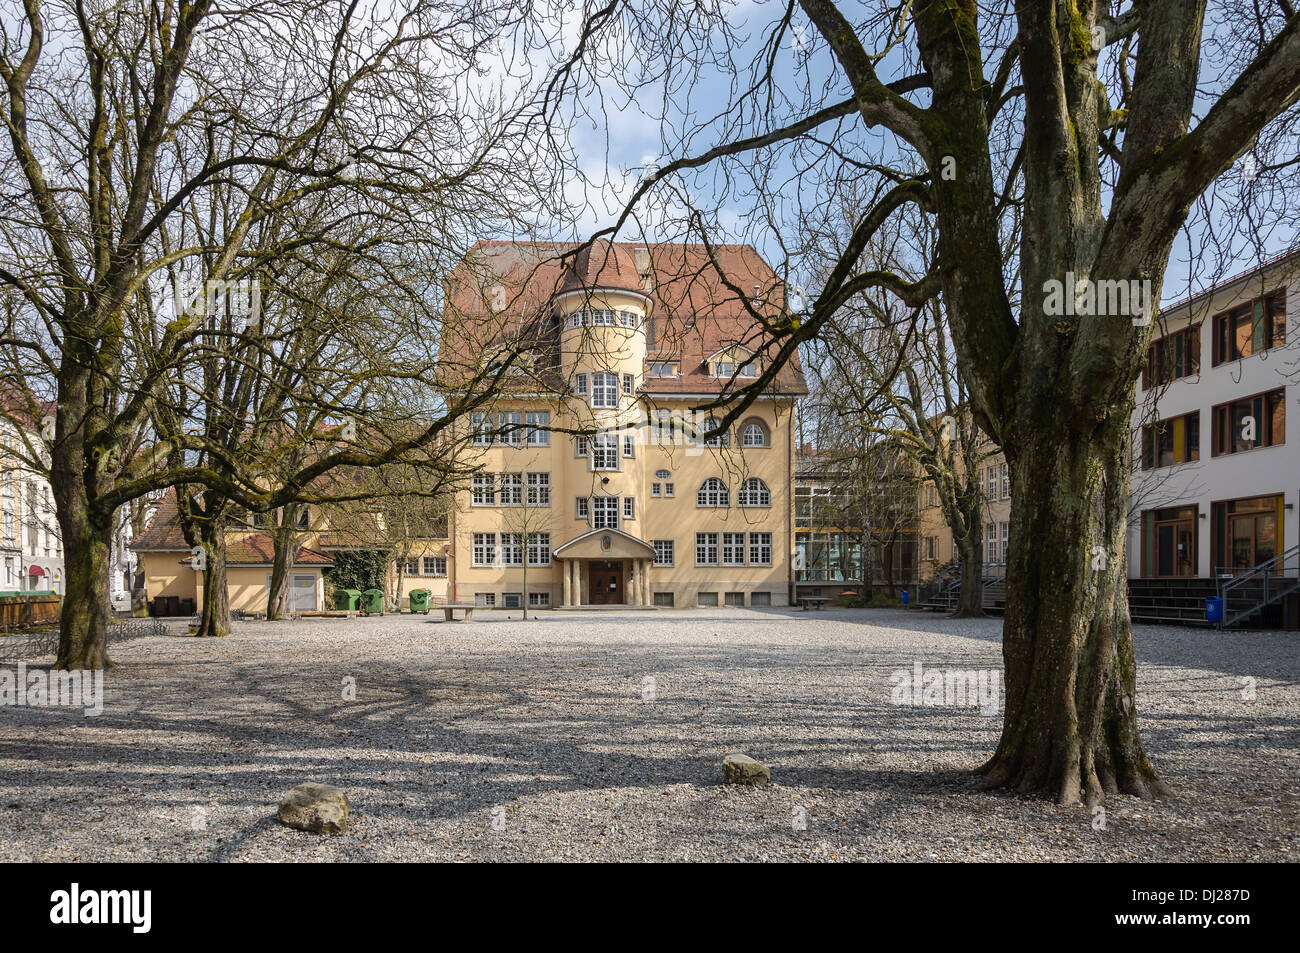 Konstanz, Germany: School house Stock Photo